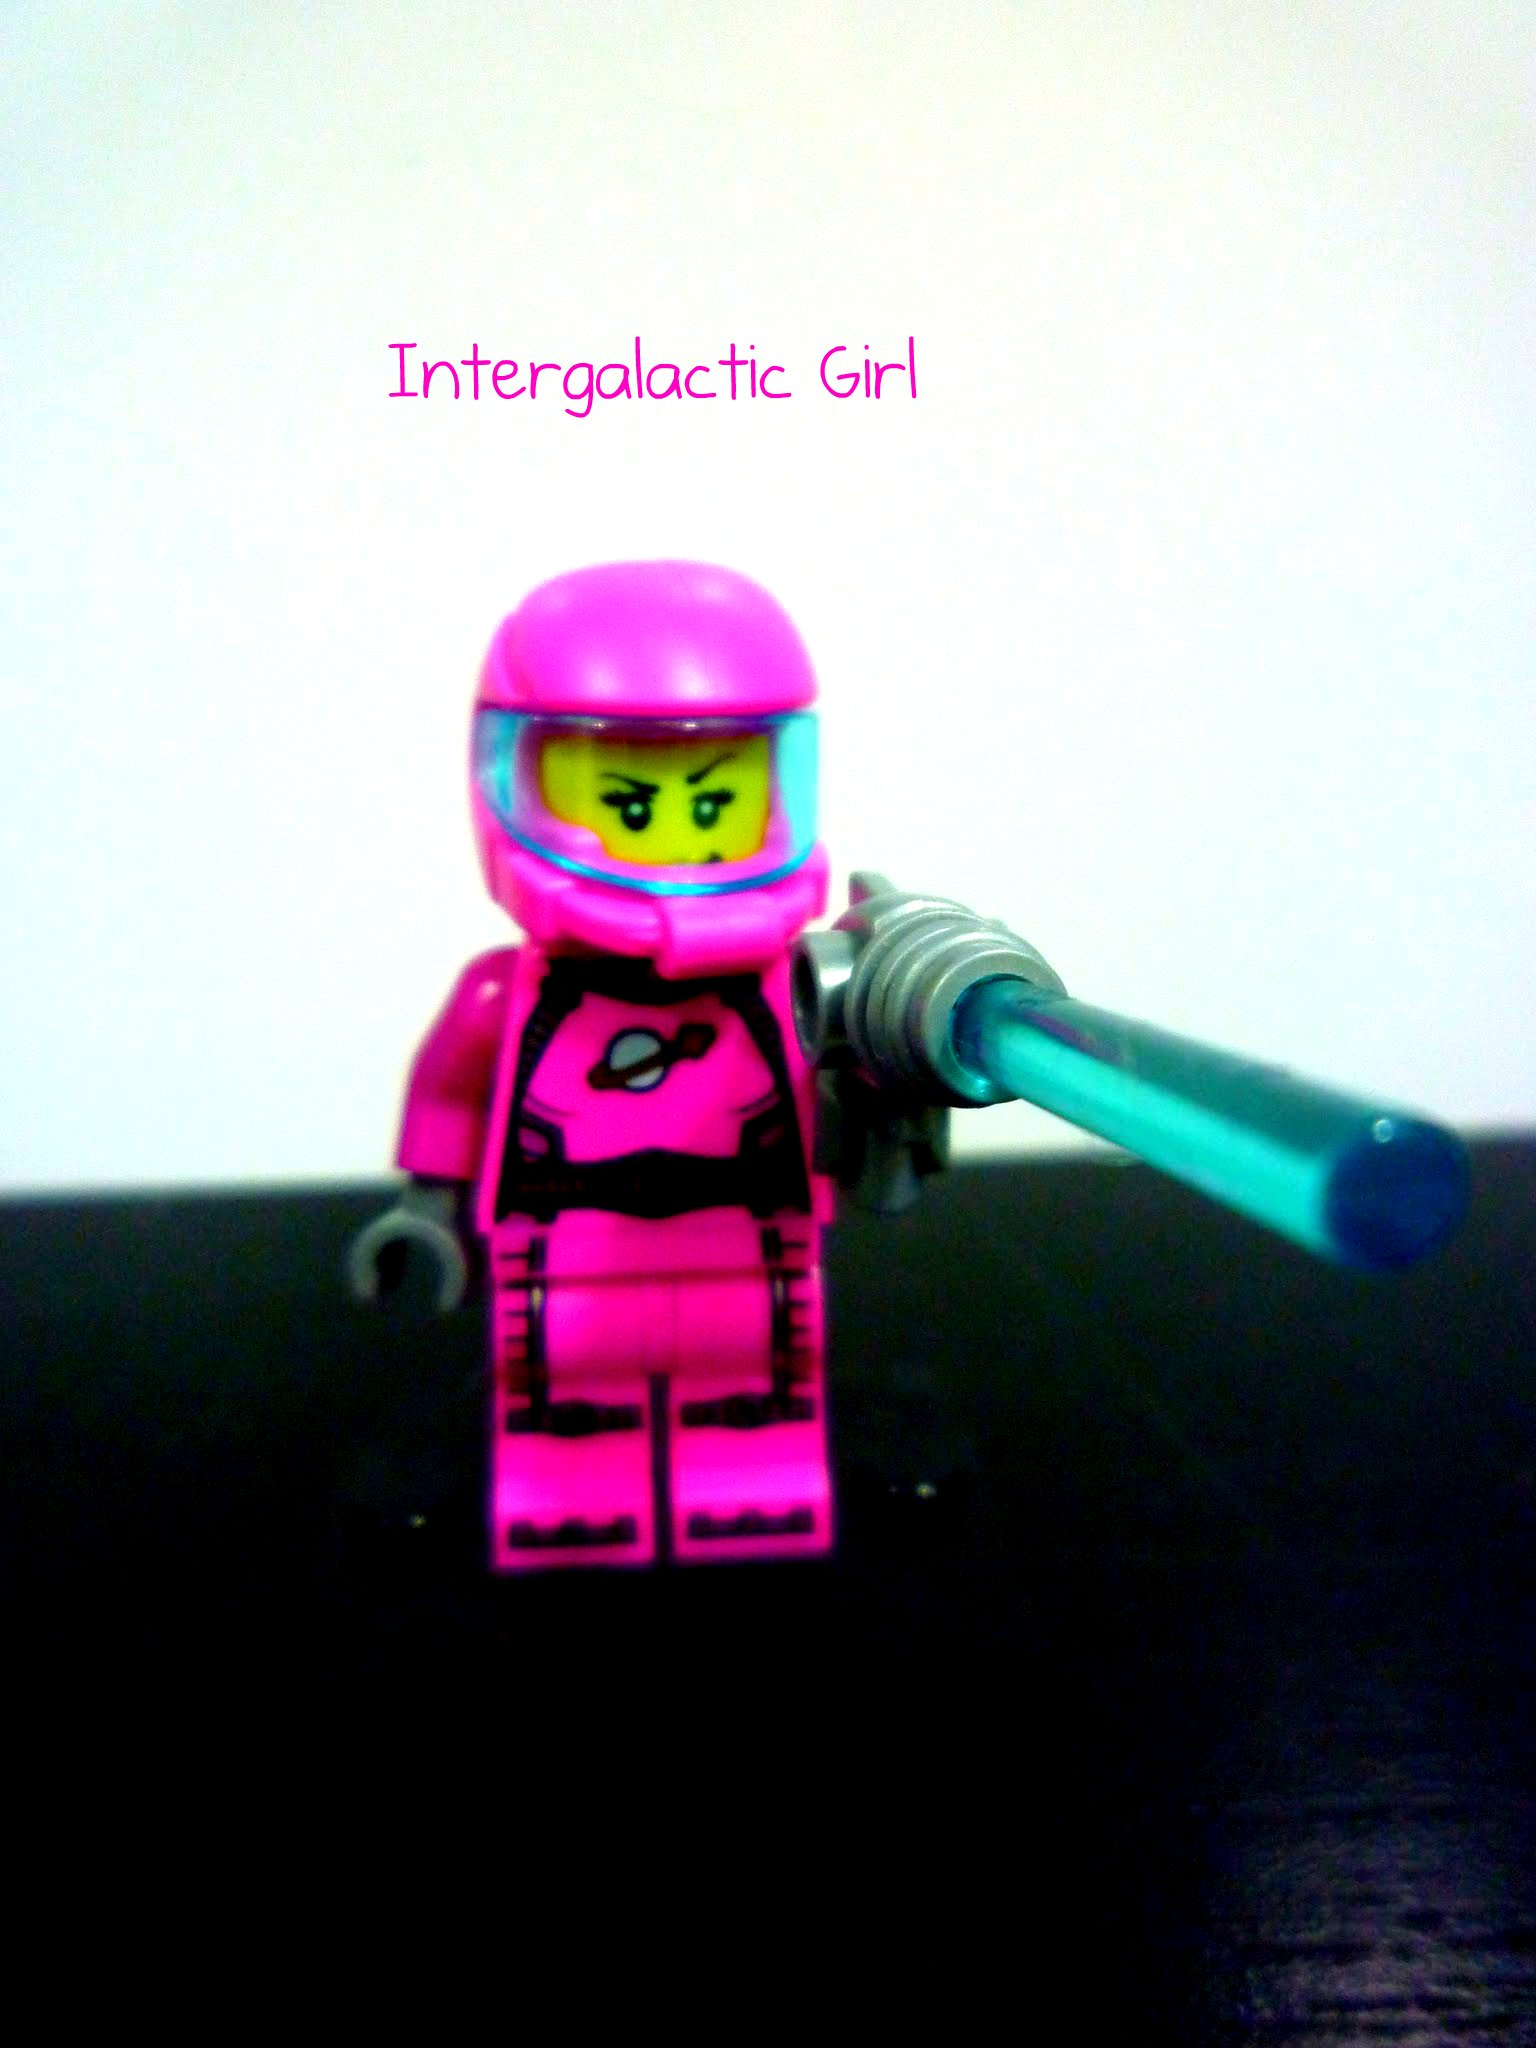 LEGO-Minifigures Série 6 x 1 Ray gun pour intergalactique Girl from series 6 part 